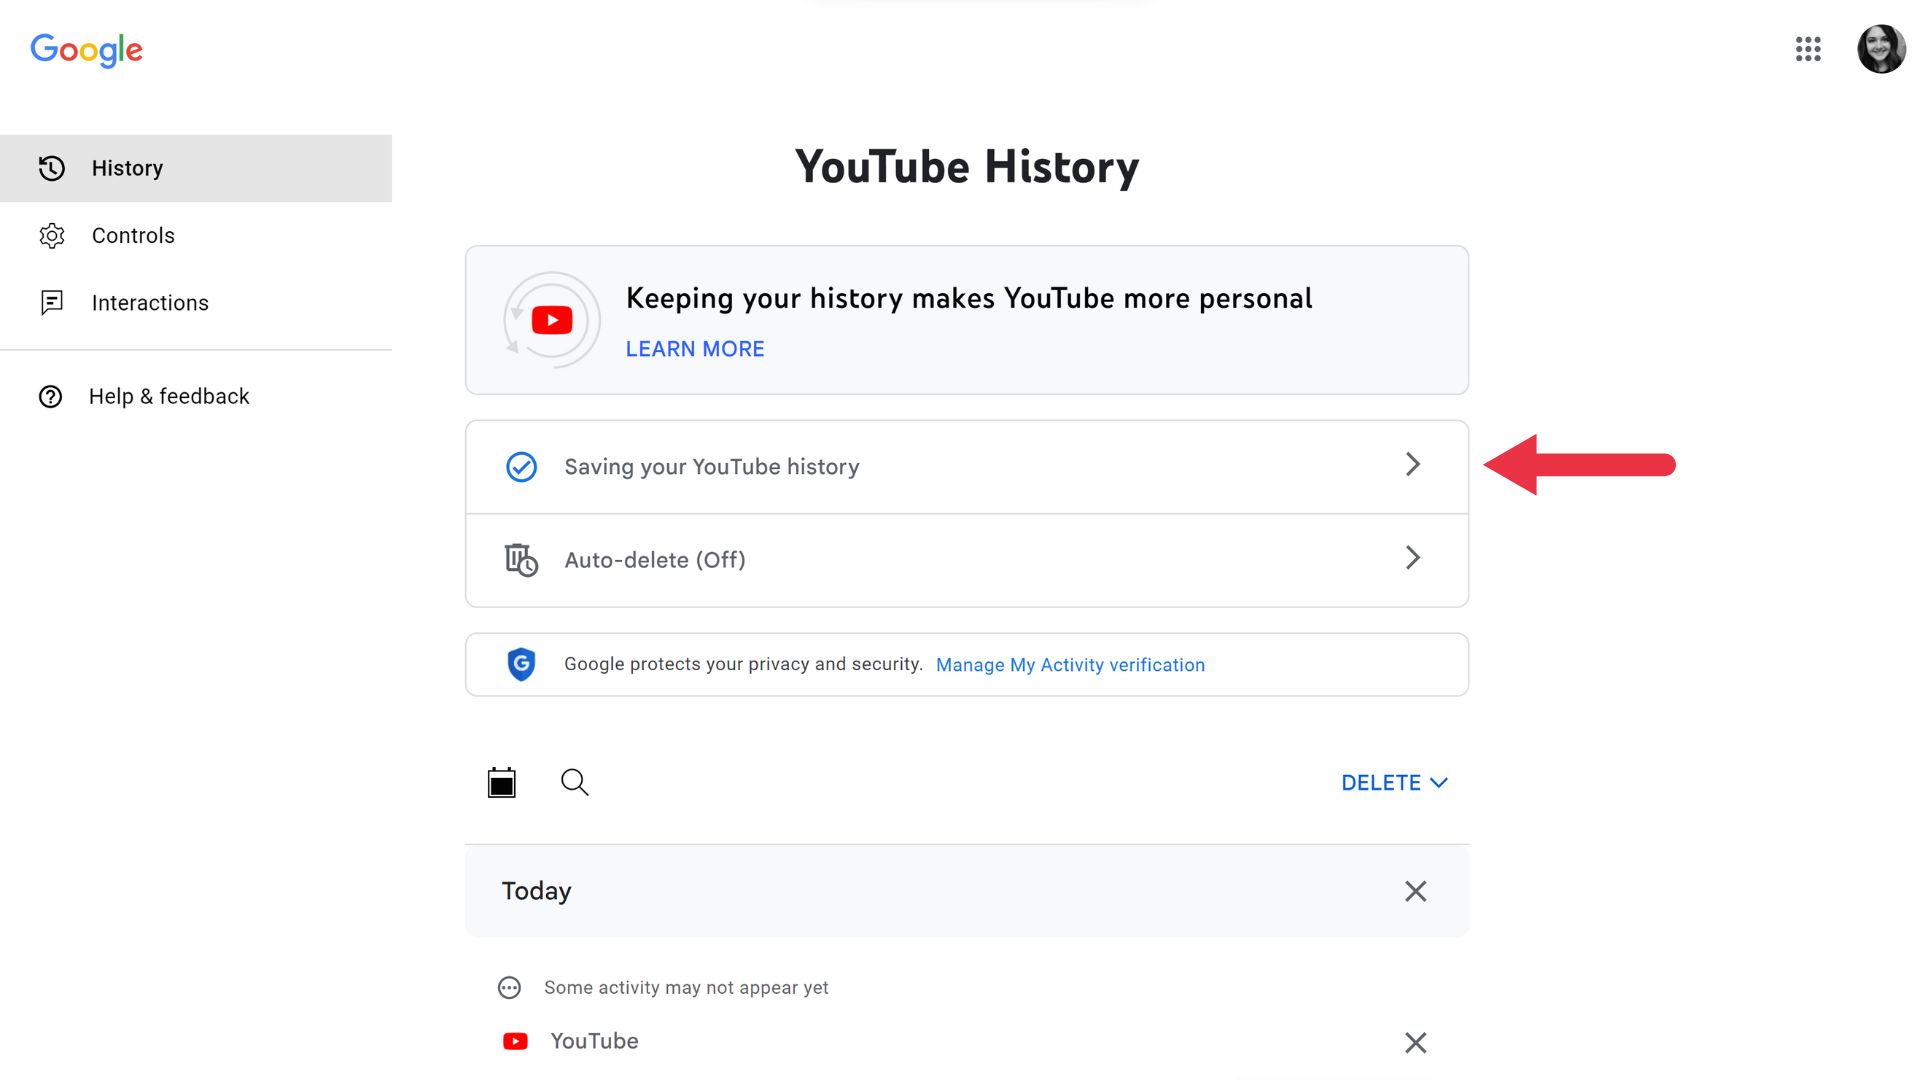 savings your youtube history setting